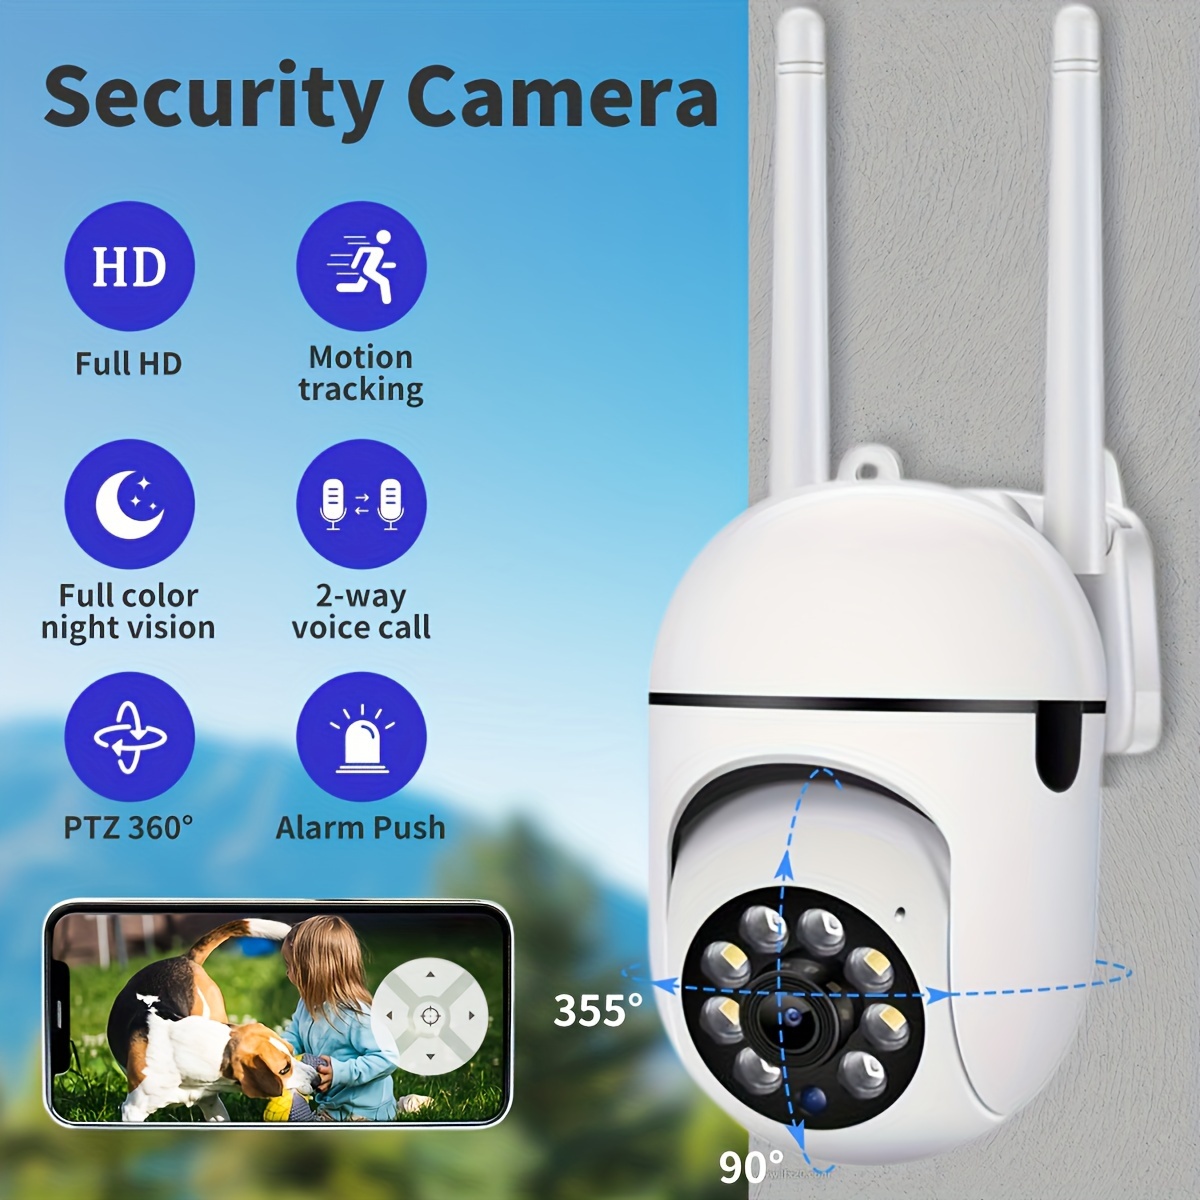 4PCS Camaras De Seguridad Para Exterior Wifi Inalambrica Con Vision Nocturna